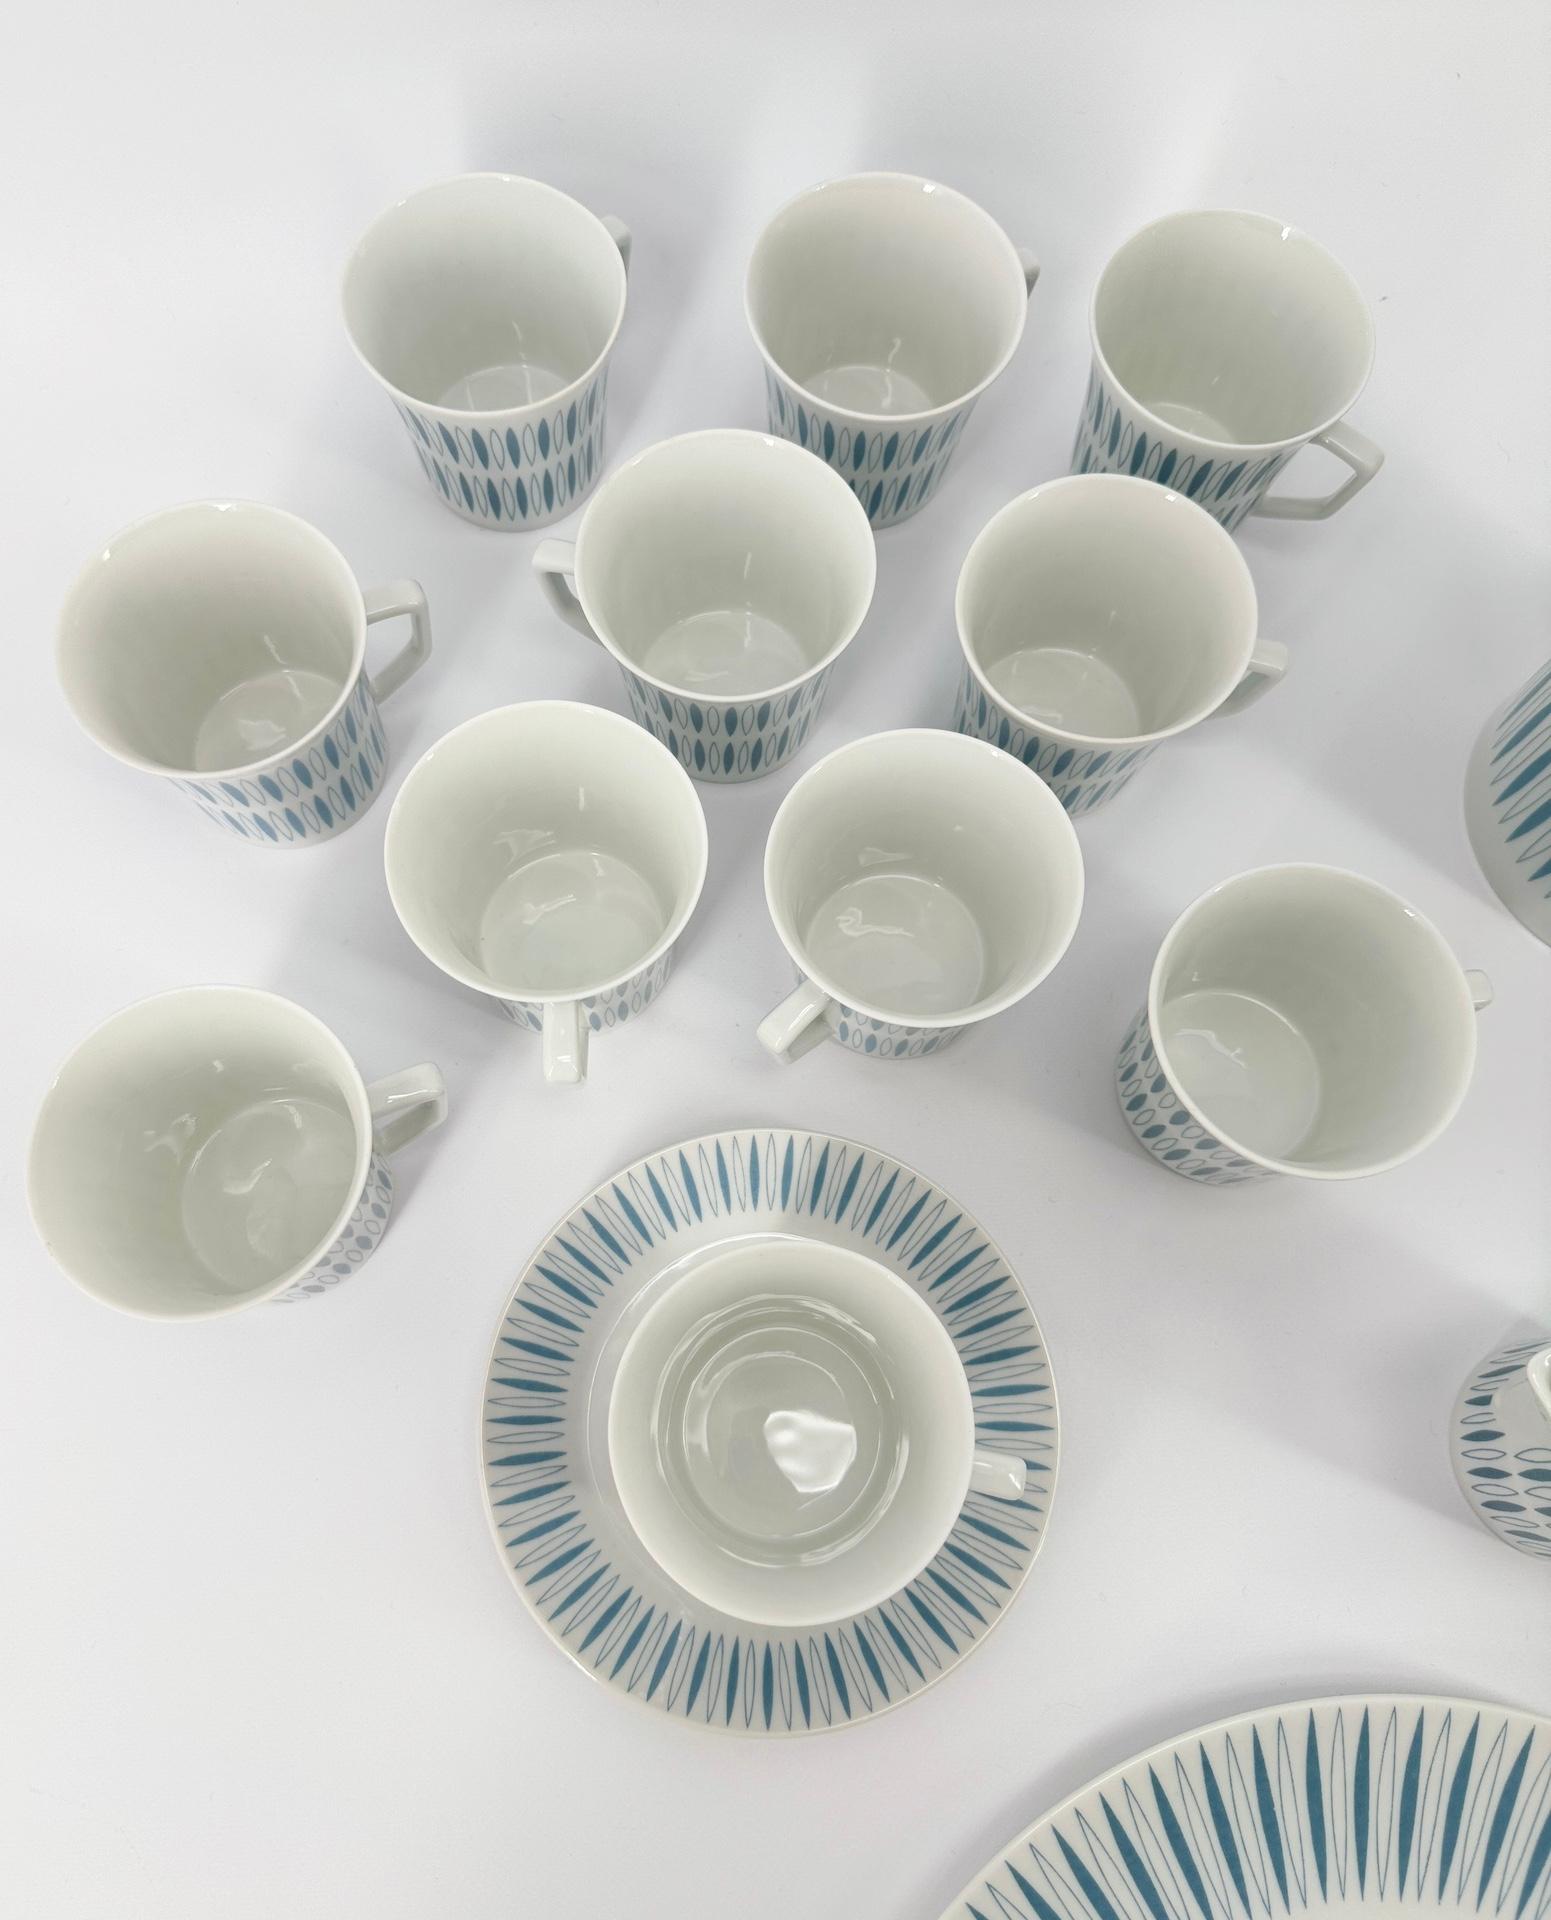 German Porcelain Tea Coffee and Dessert Set Furstenberg 1960’s White and Blue 37 Pieces